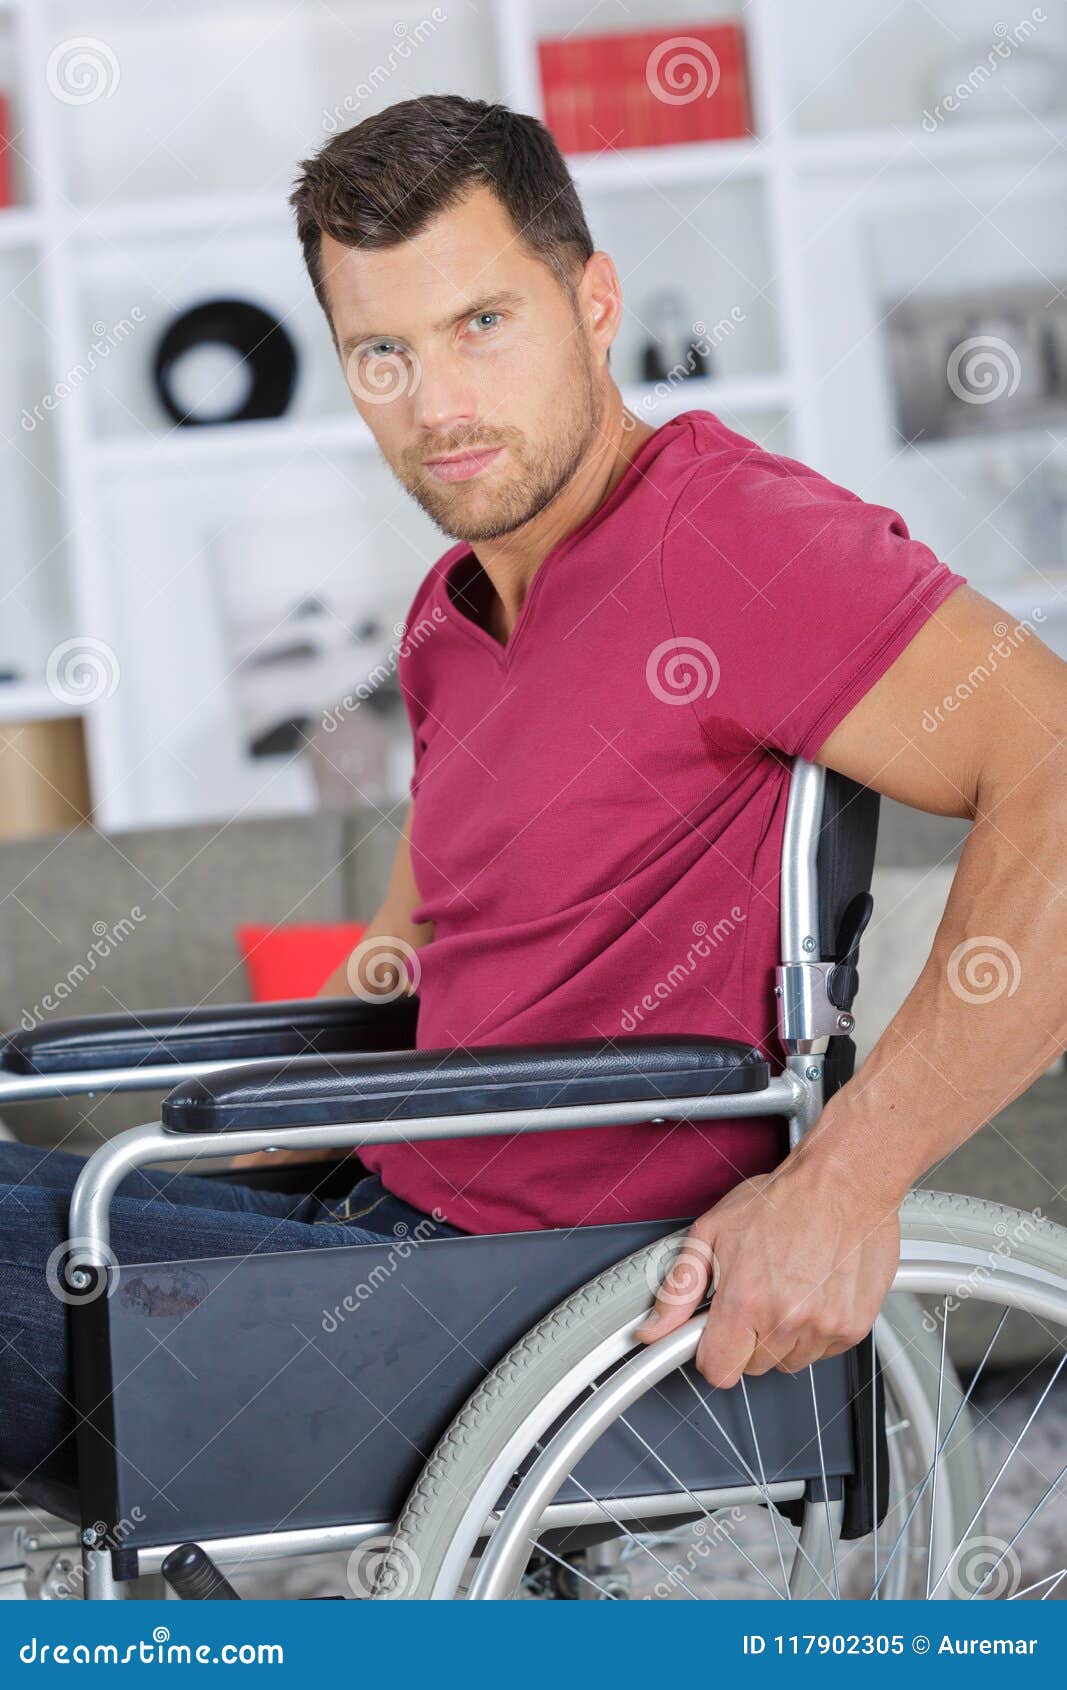 Handsom Disabled Man on Wheelchair Stock Image - Image of paraplegic ...